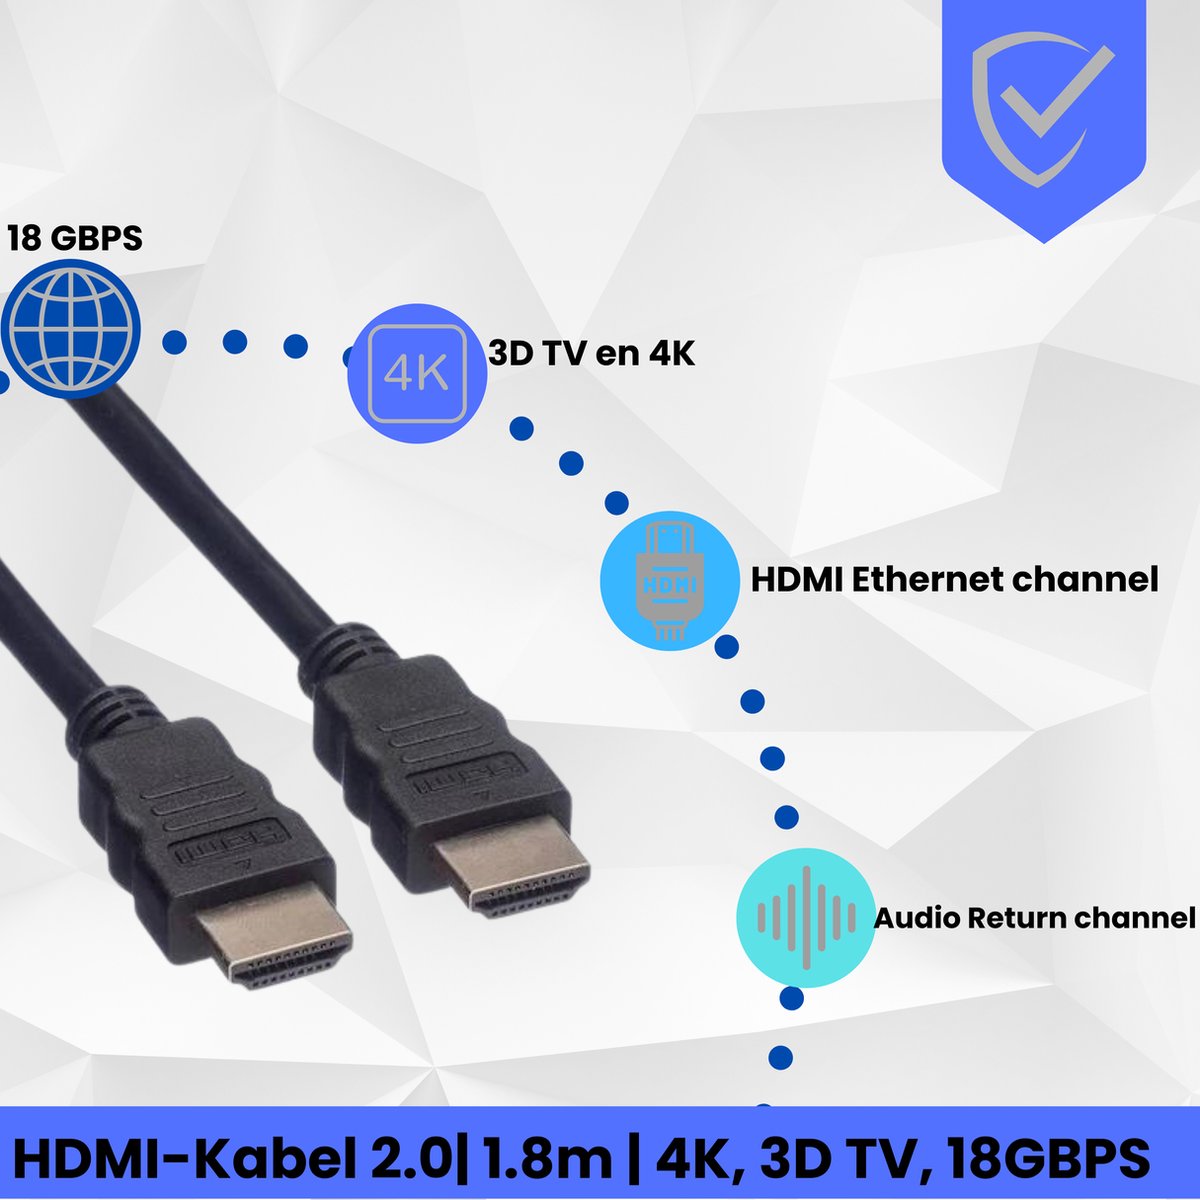 HDMI kabel - 1,8Meter - 4k - 3D TV - 18GBPS - TV, PC, Laptop, Beamer, PS4, PS5, Xbox.